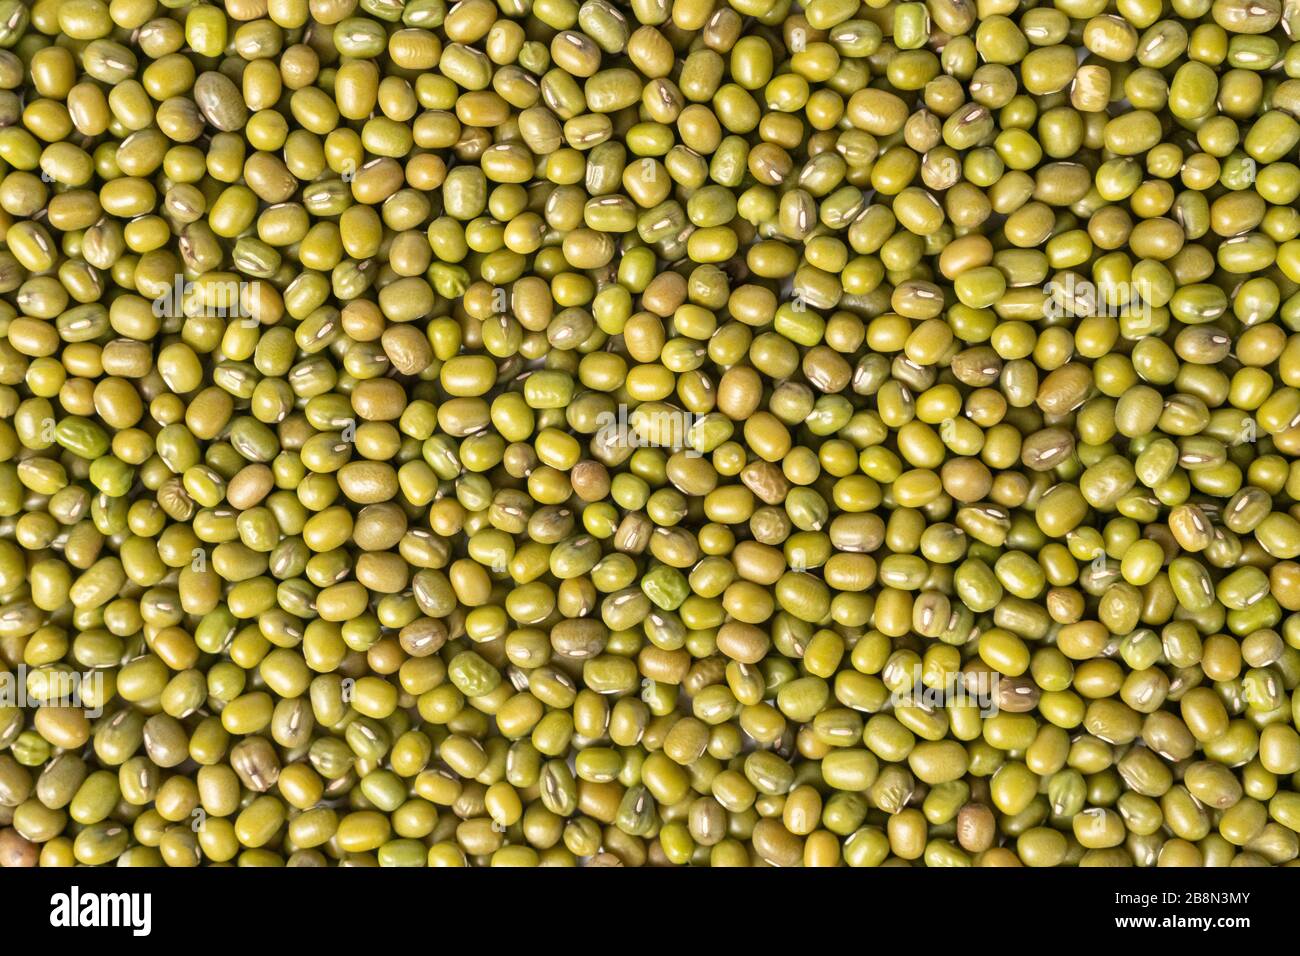 Green mung bean close-up. Abstract background, asian food Stock Photo